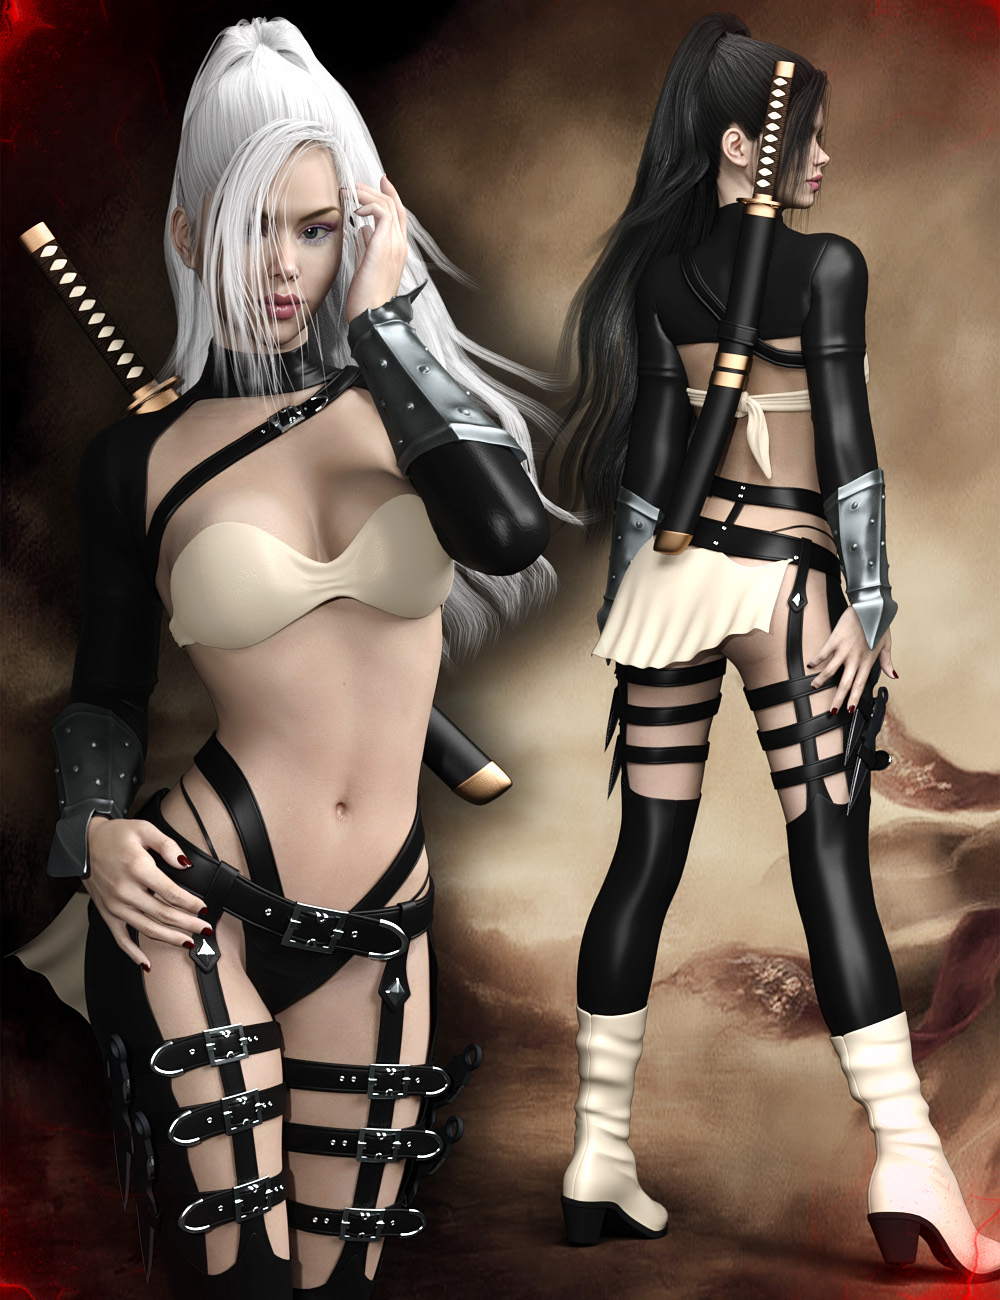 Samurai for Genesis 3 Female(s) by: Pretty3D, 3D Models by Daz 3D